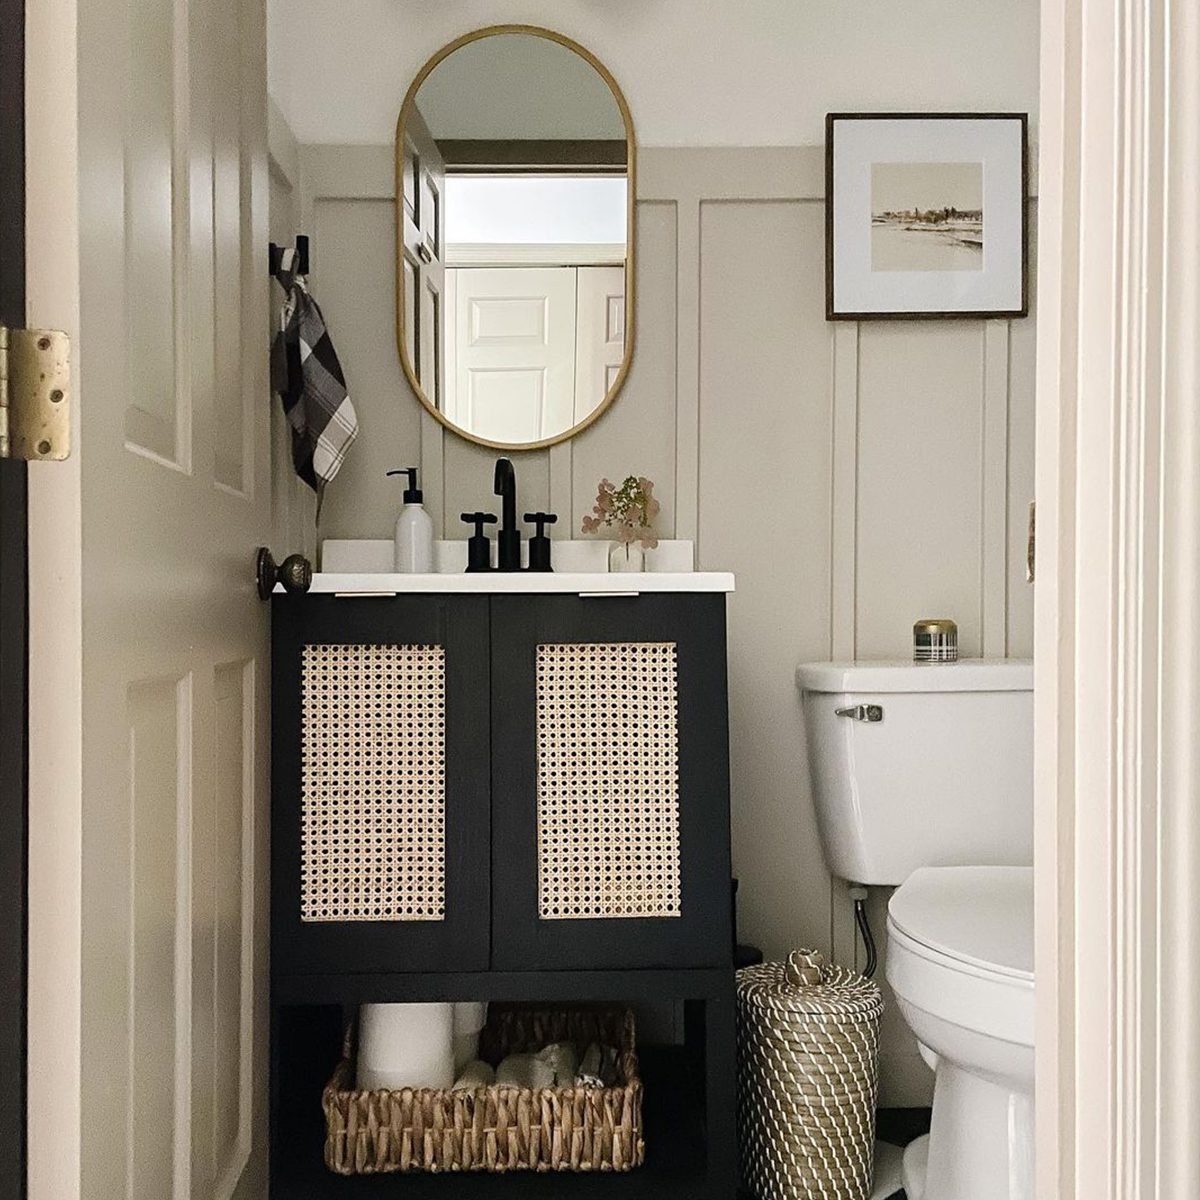 12 DIY Bathroom Ideas  Bathroom basket storage, Diy bathroom, Home projects